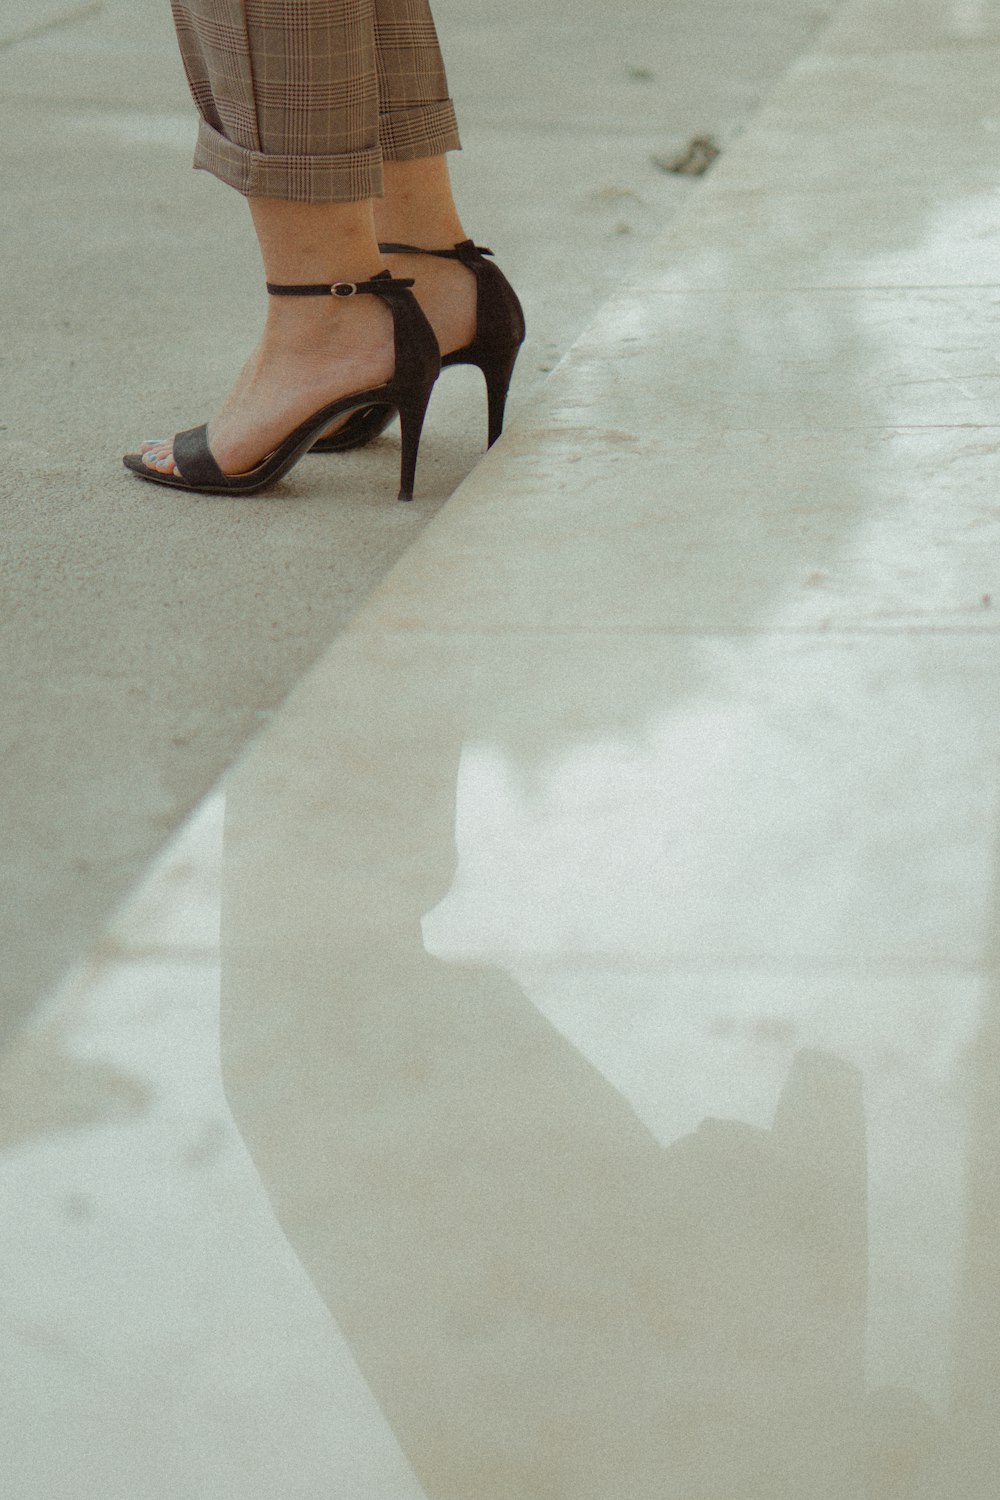 woman wearing black open-toe ankle strap heeled sandals